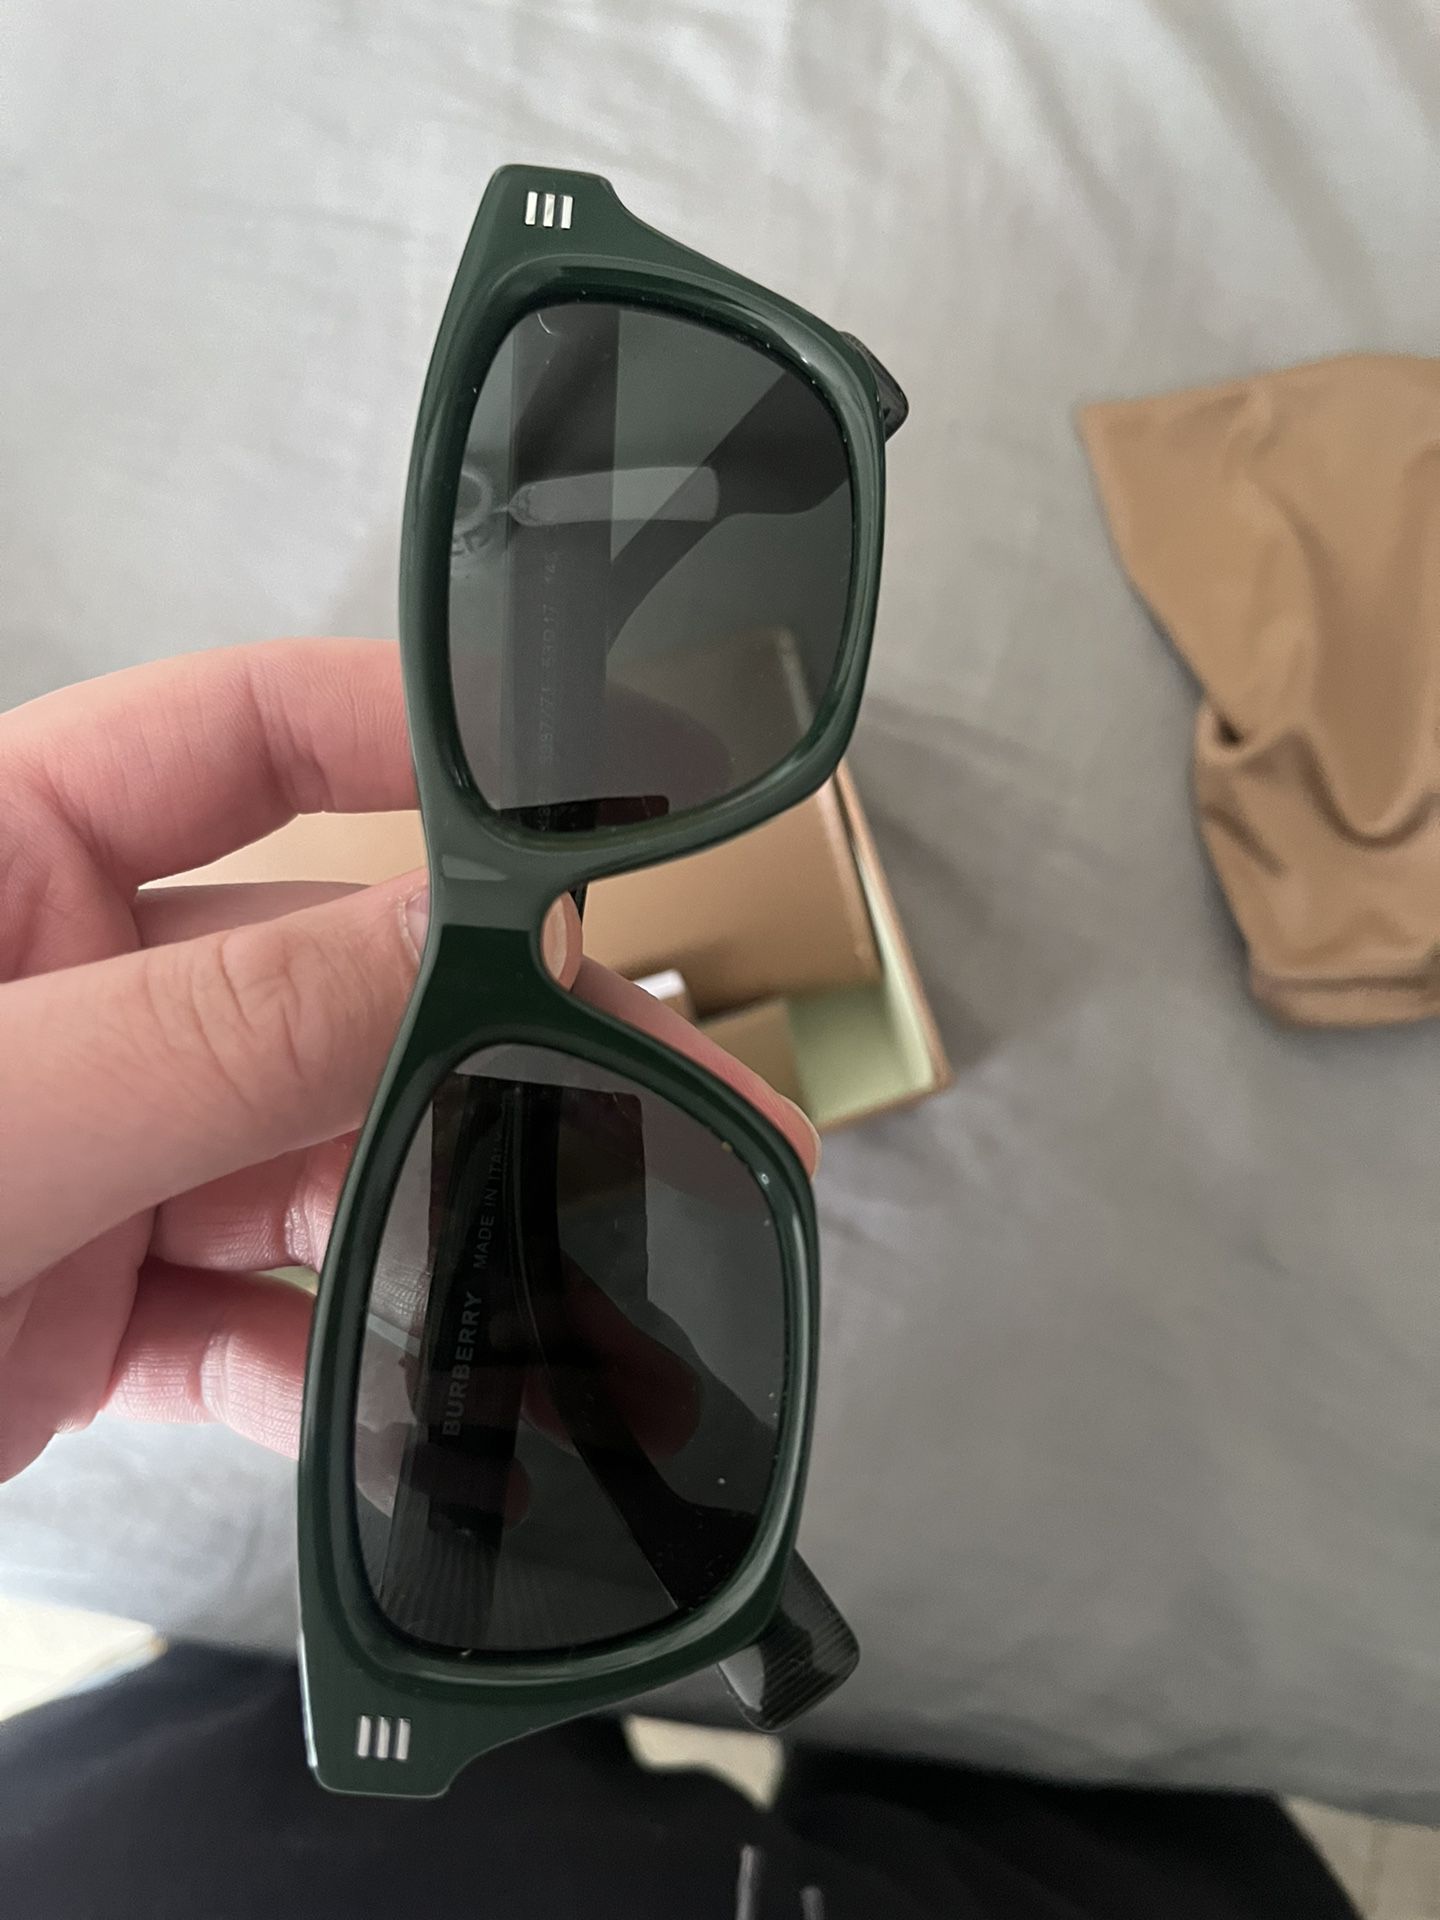 Brand New Never Worn Burberry Sunglasses 